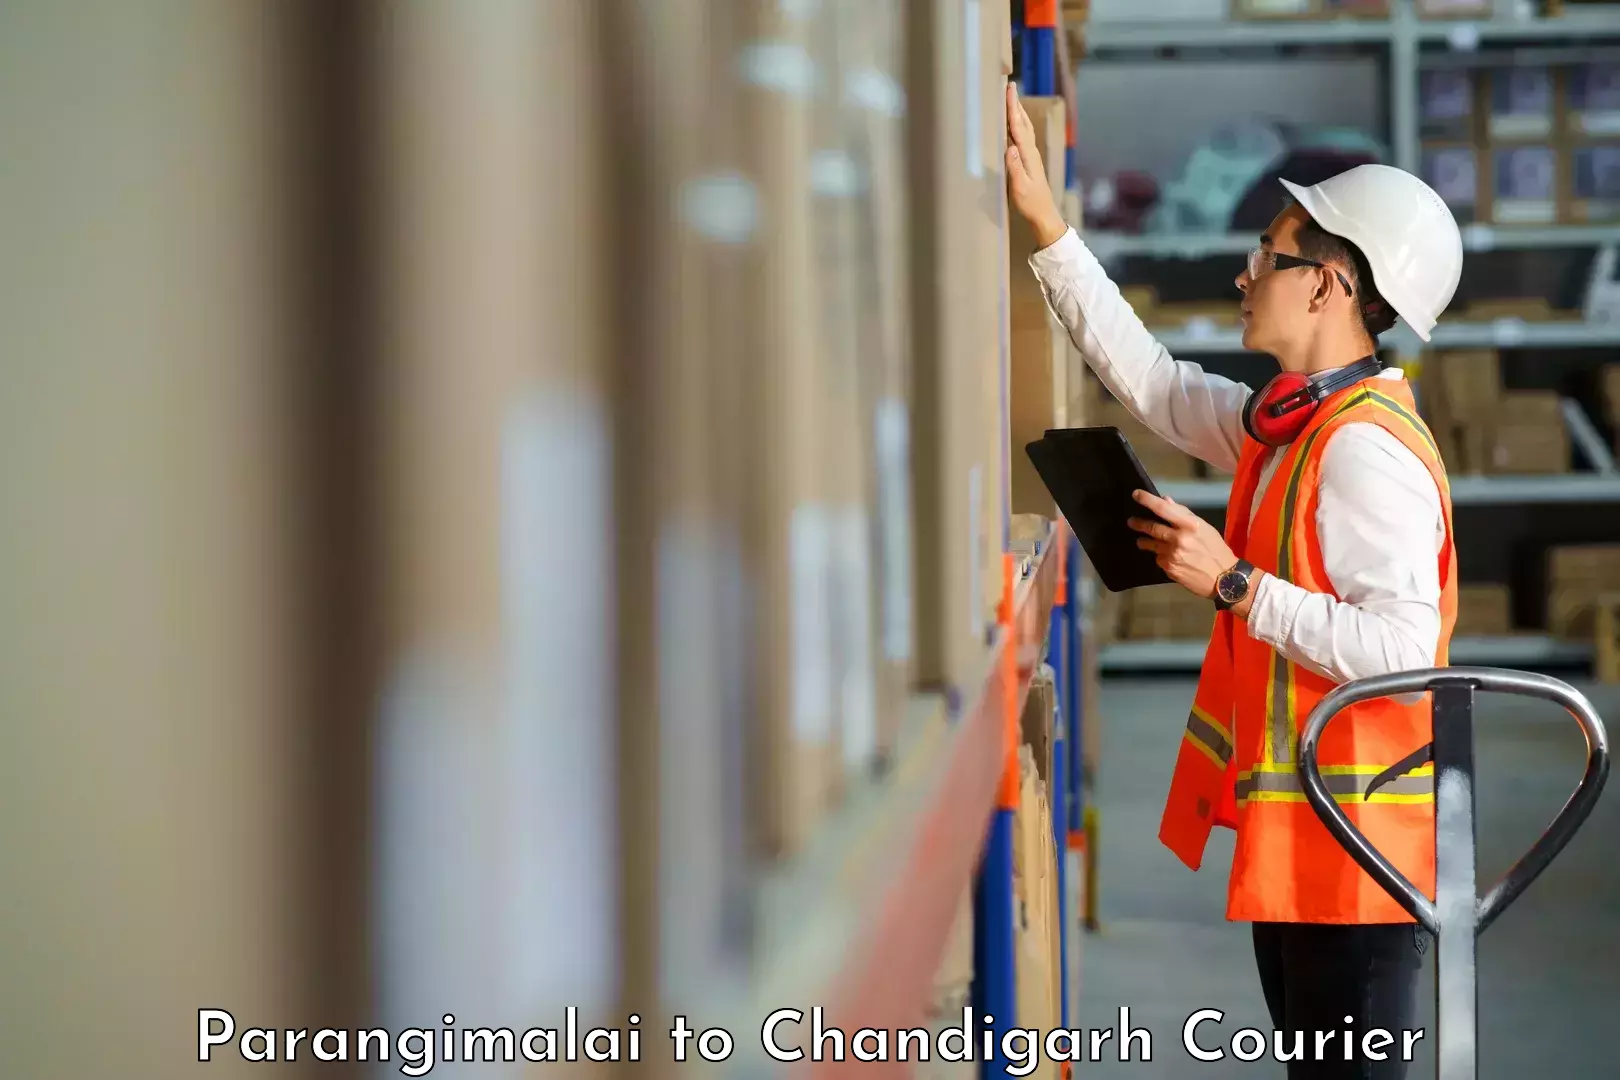 International courier networks Parangimalai to Chandigarh